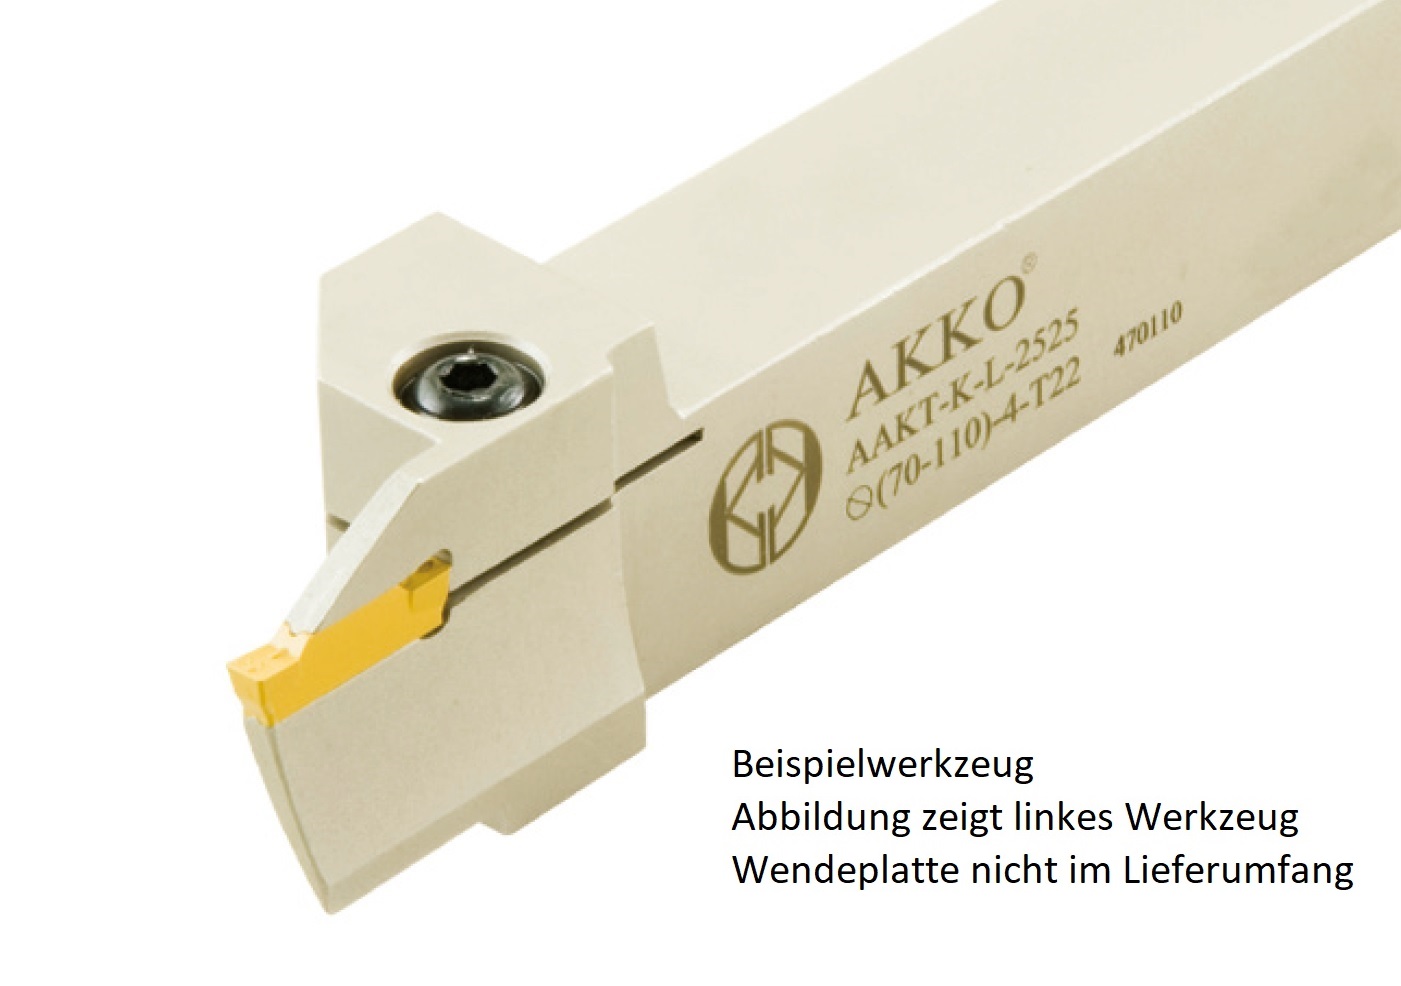 AKKO-Axial-Stechhalter, kompatibel mit Korloy-Stechplatte MGM.-5
Schaft-ø 25x25, Einstechbereich ø 140 - ø 200 mm, rechts